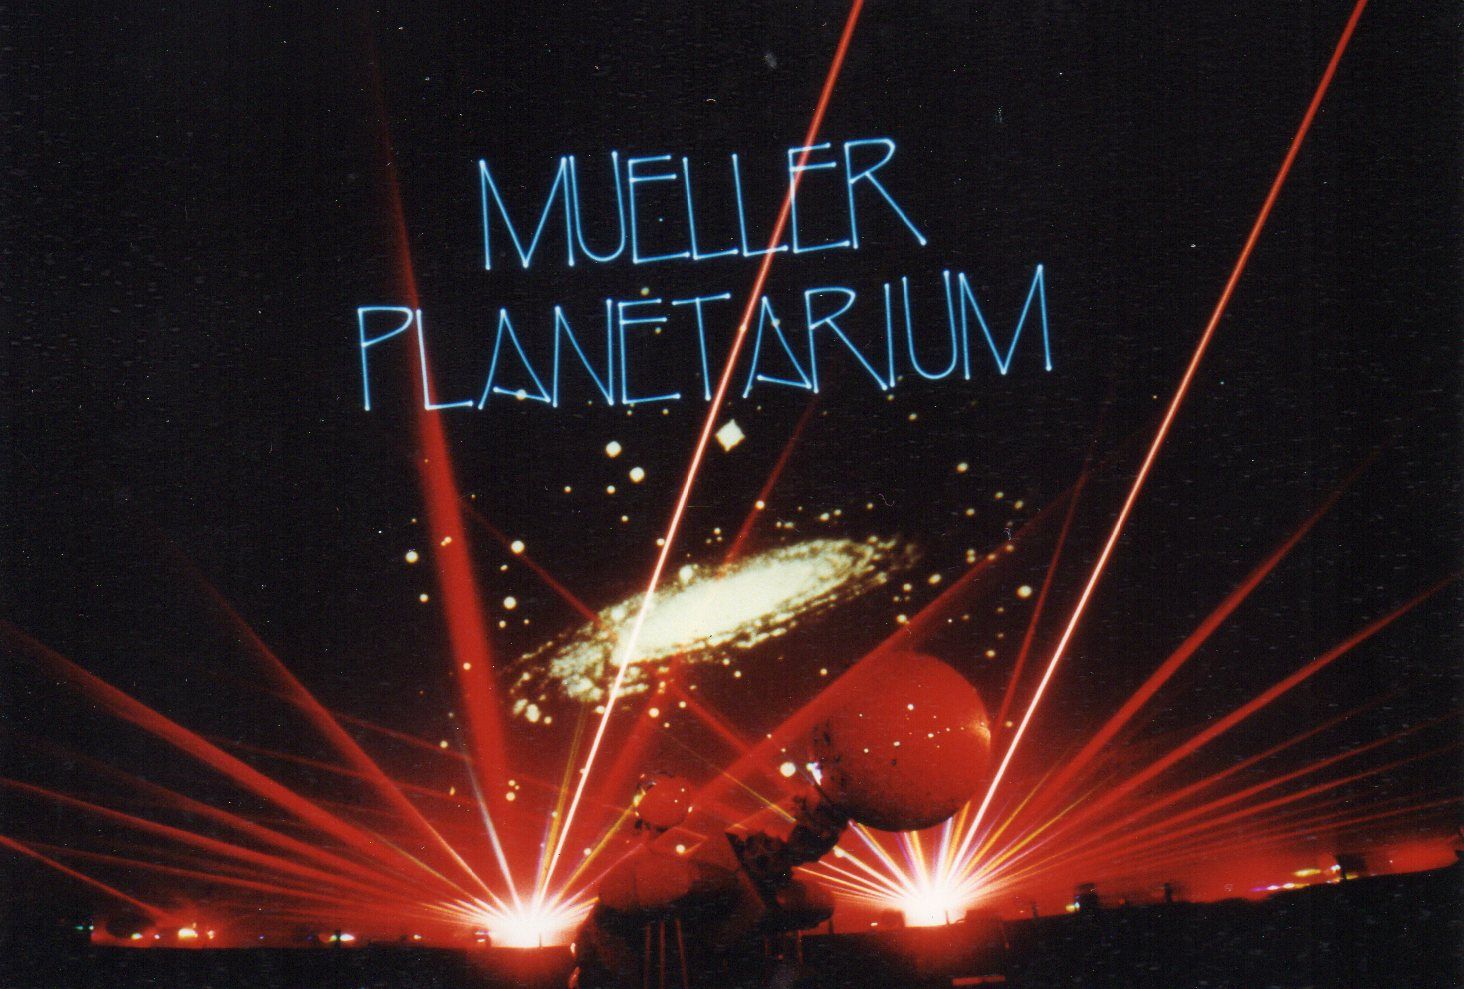 Laser show promotion (1980s)